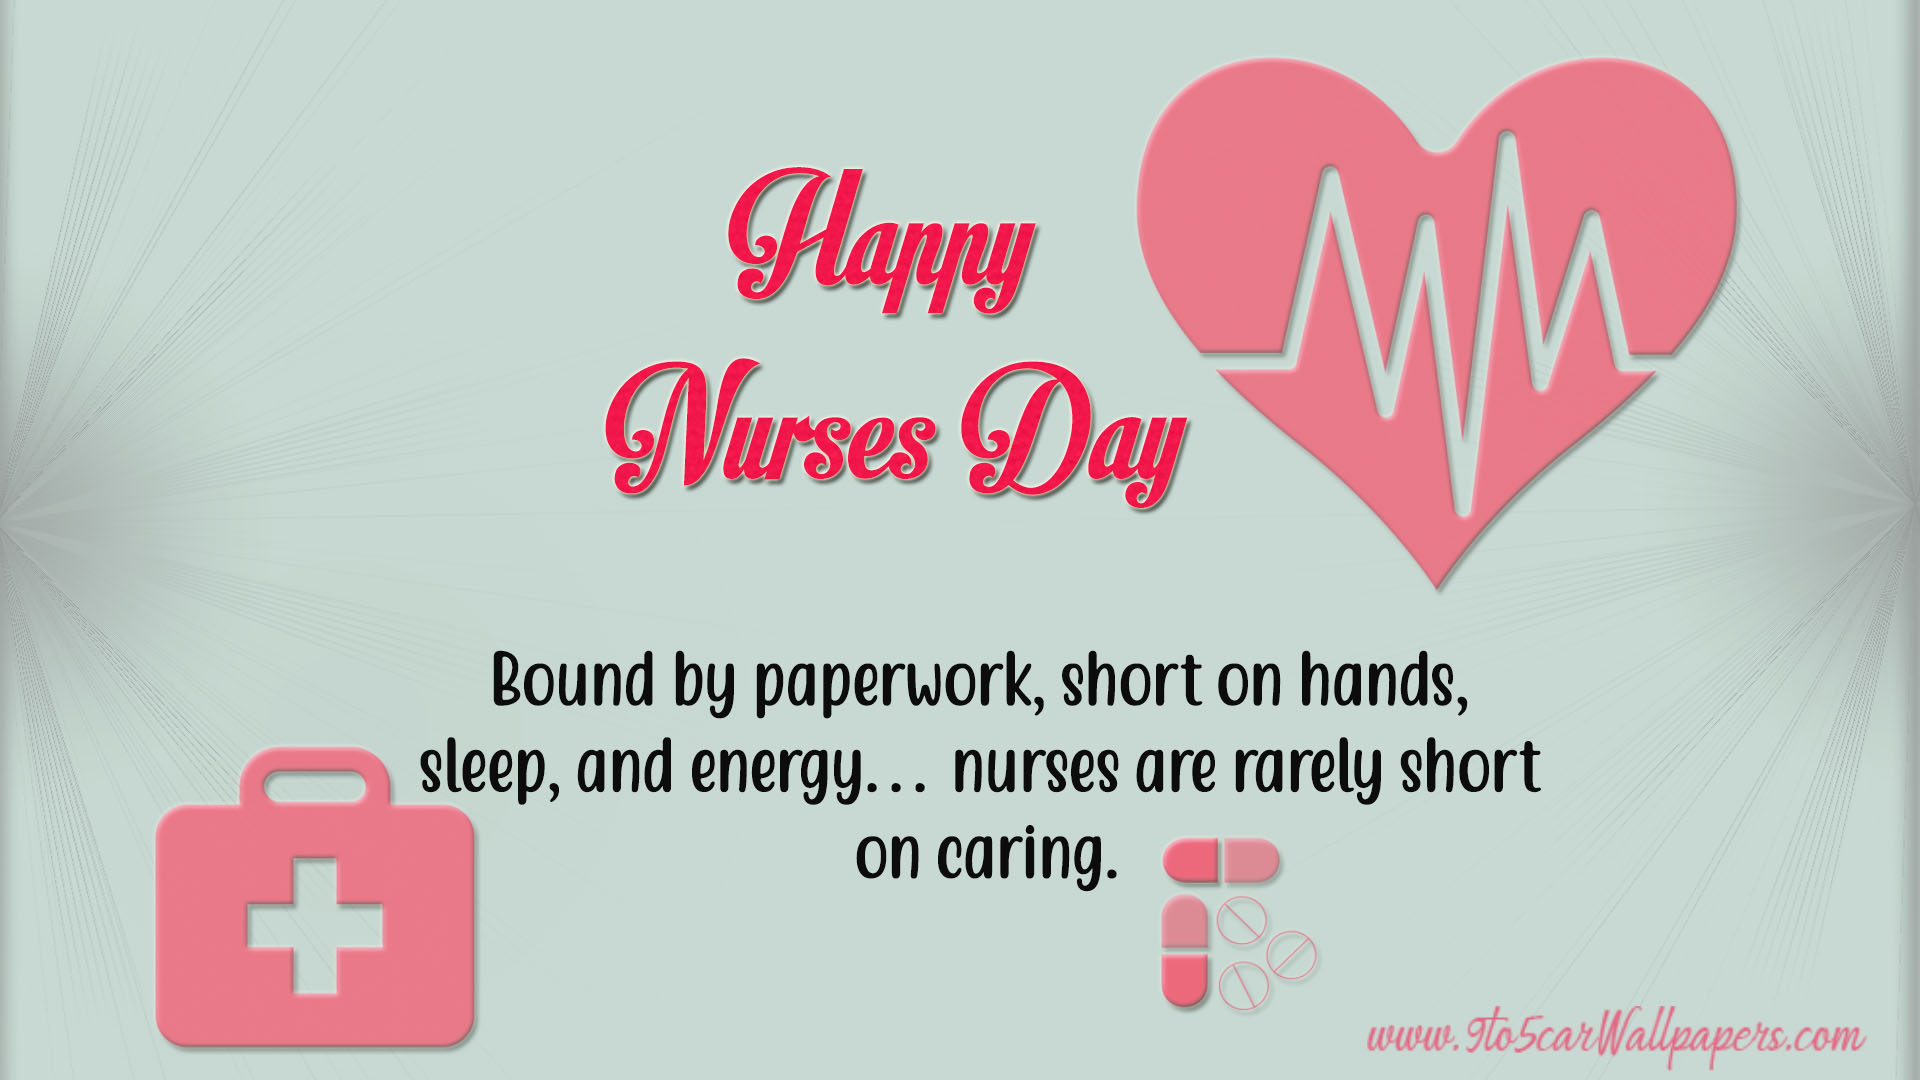 Happy Nurses Day 2019 & Nurses Day Images Free Download.